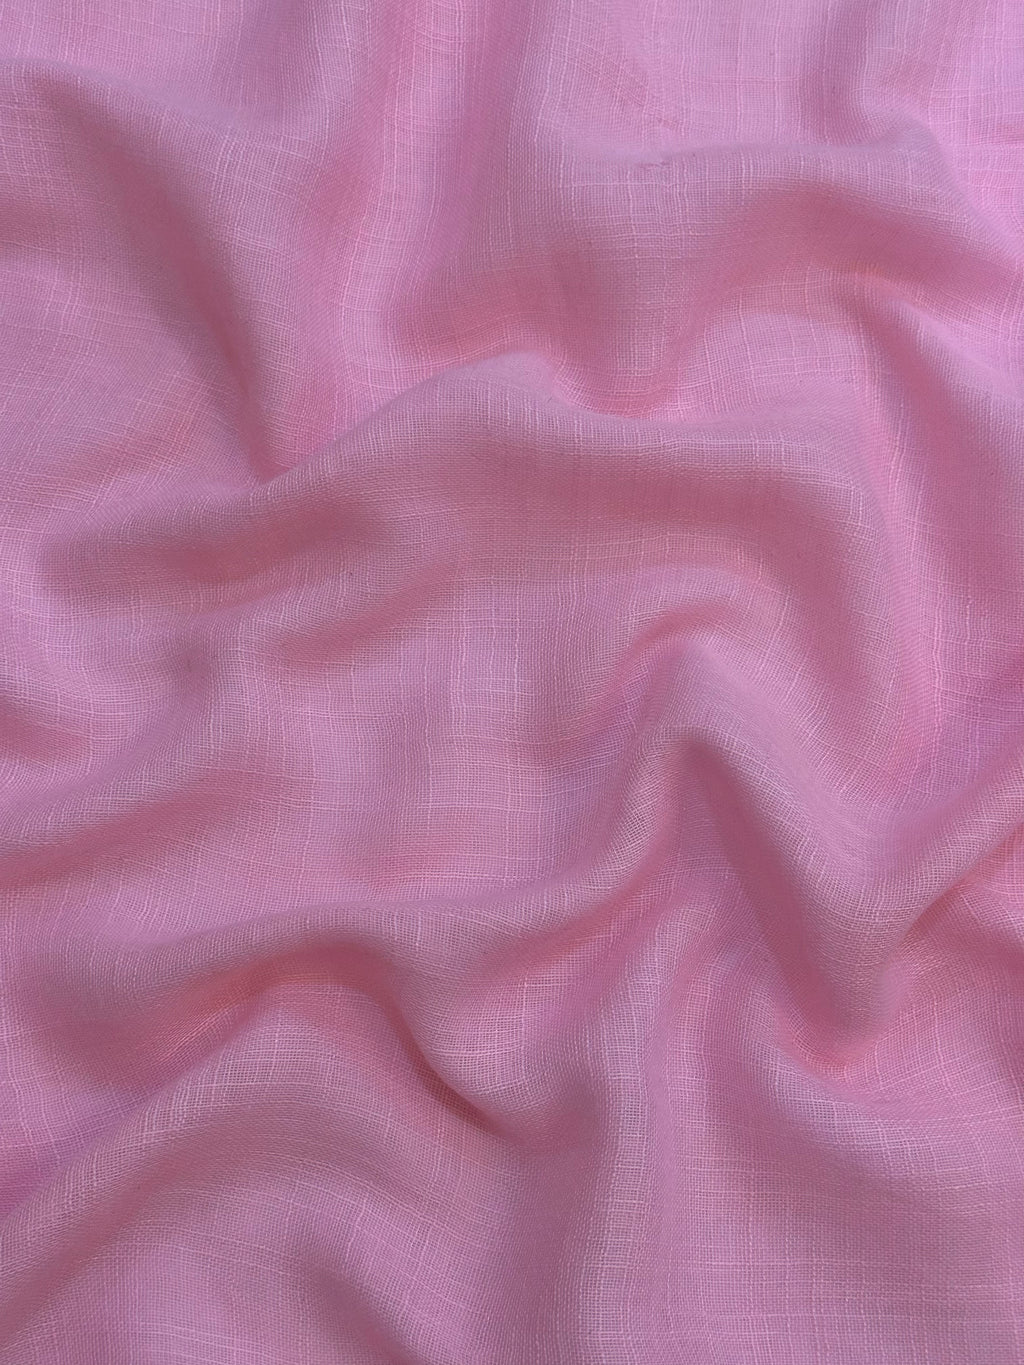 Textured Lawn Viscose - Candy Floss